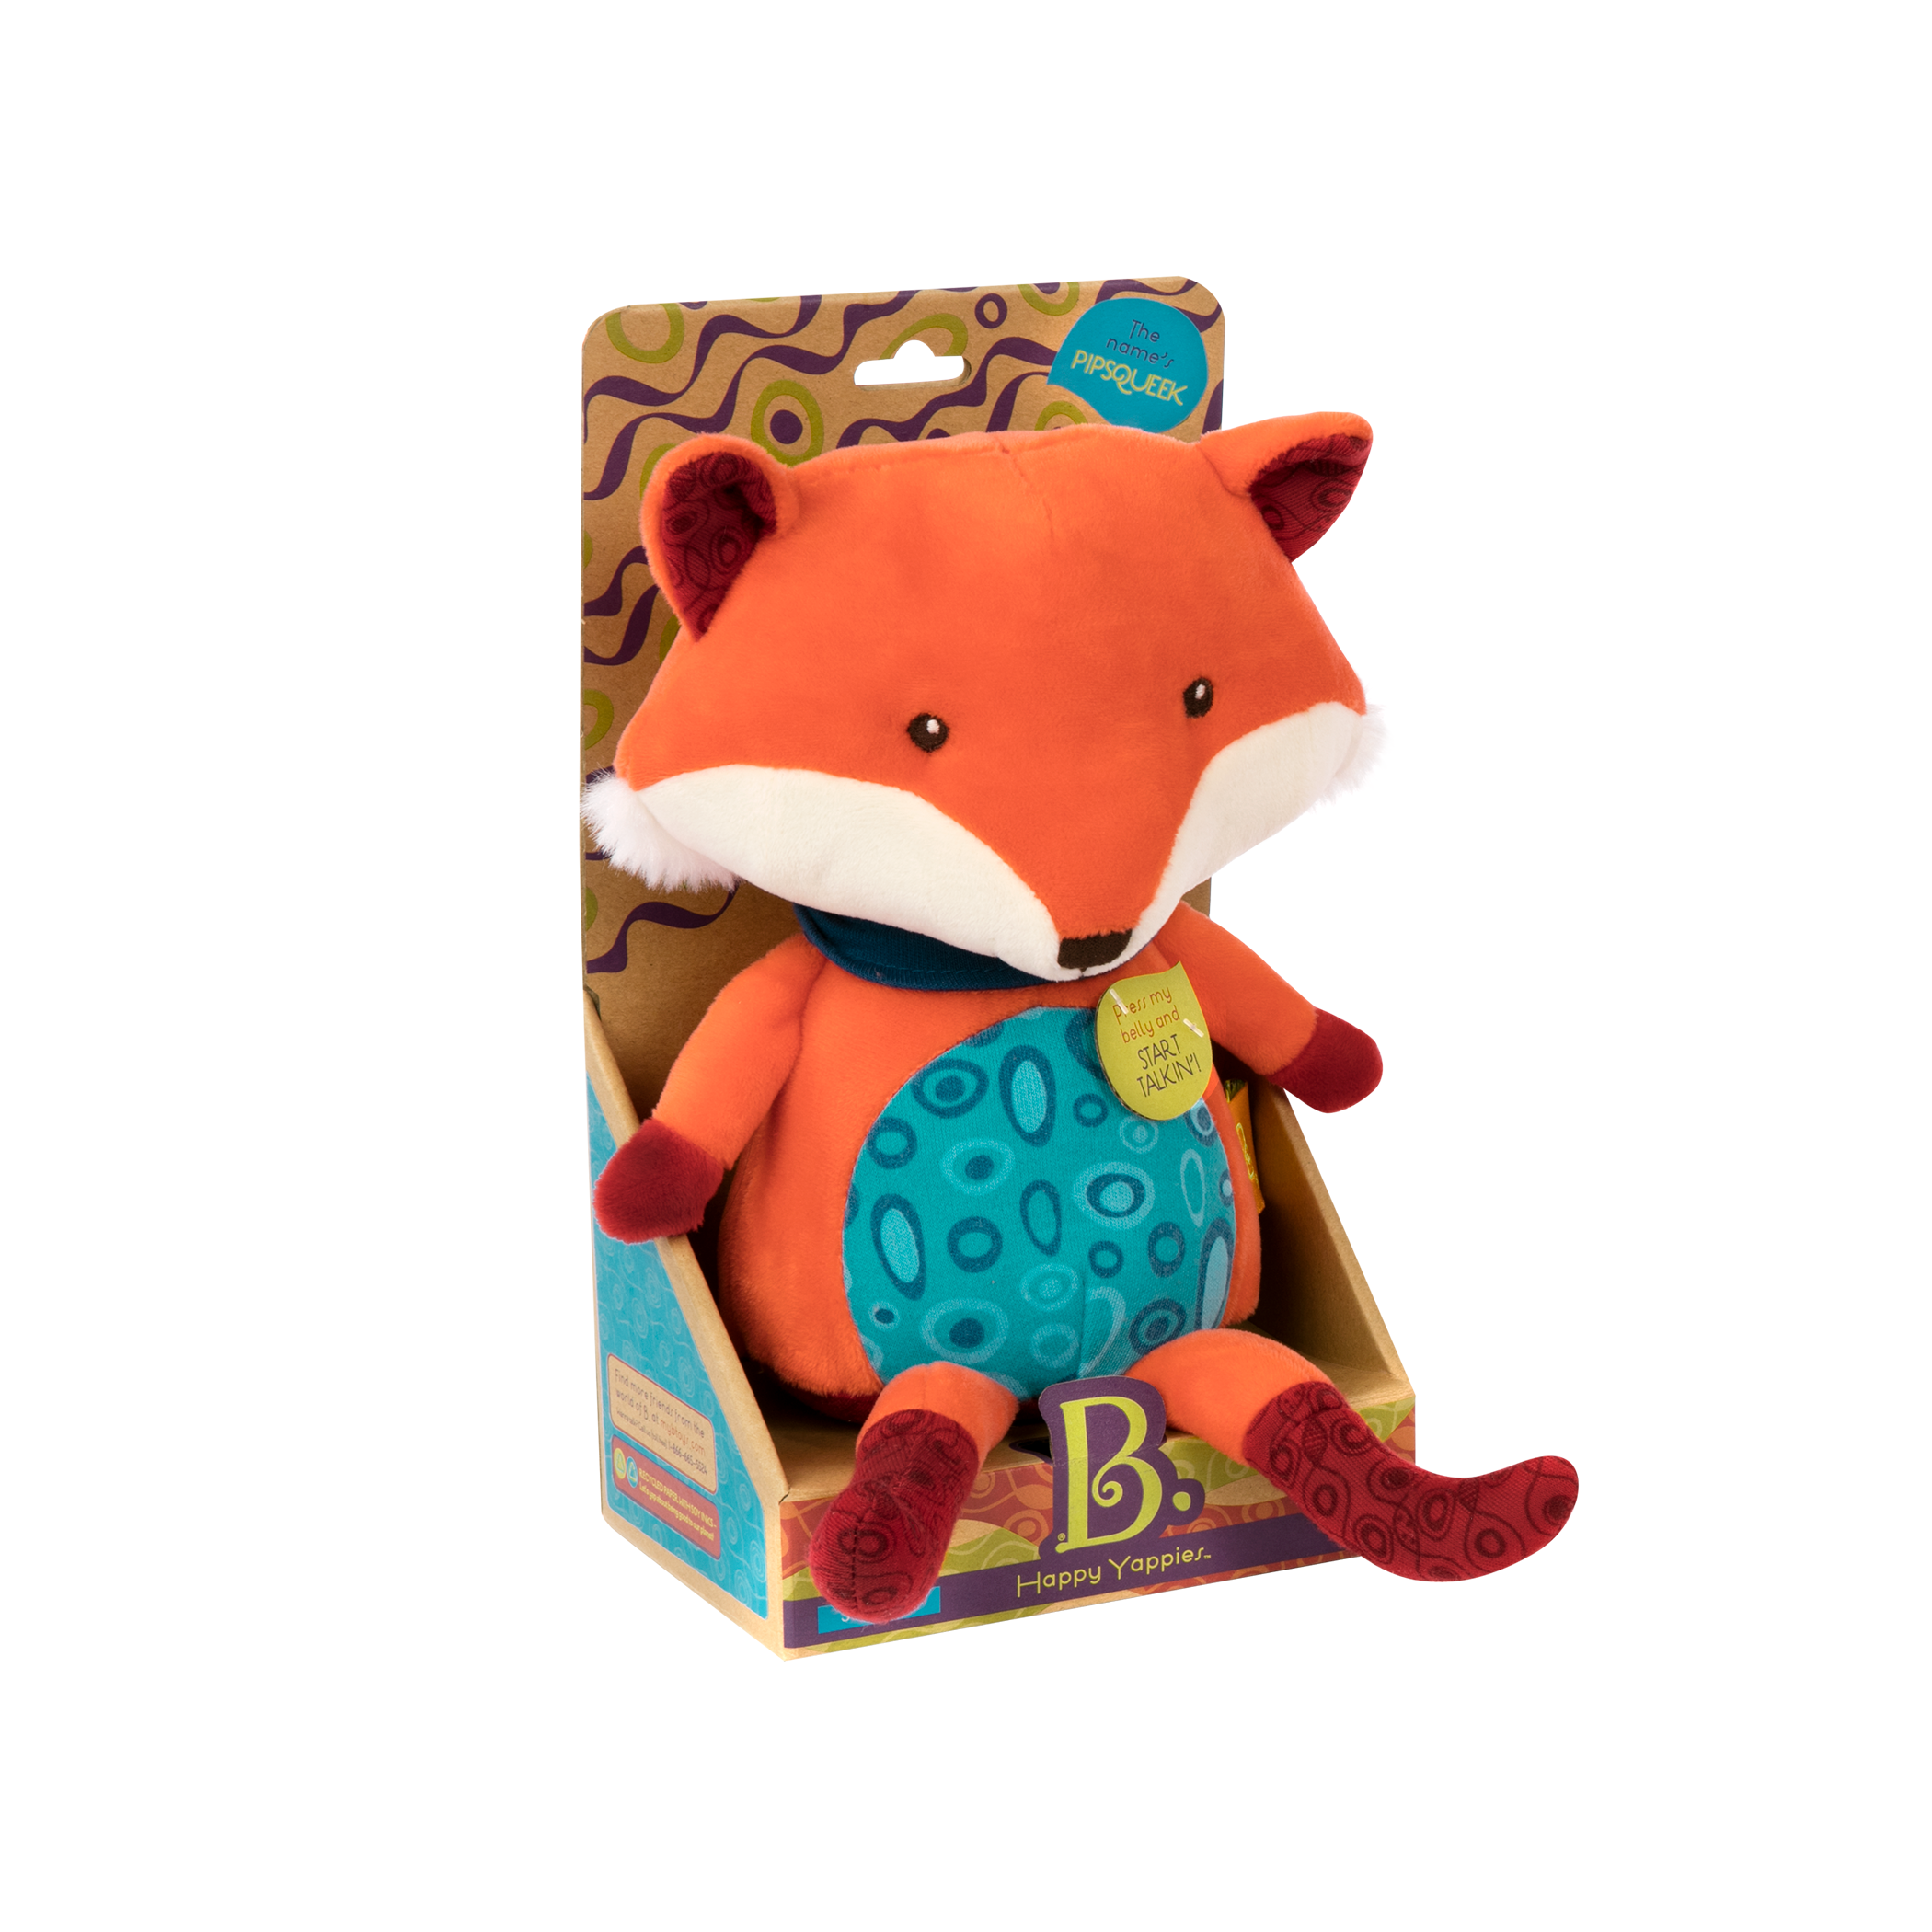 Interactive talk-back fox plushie